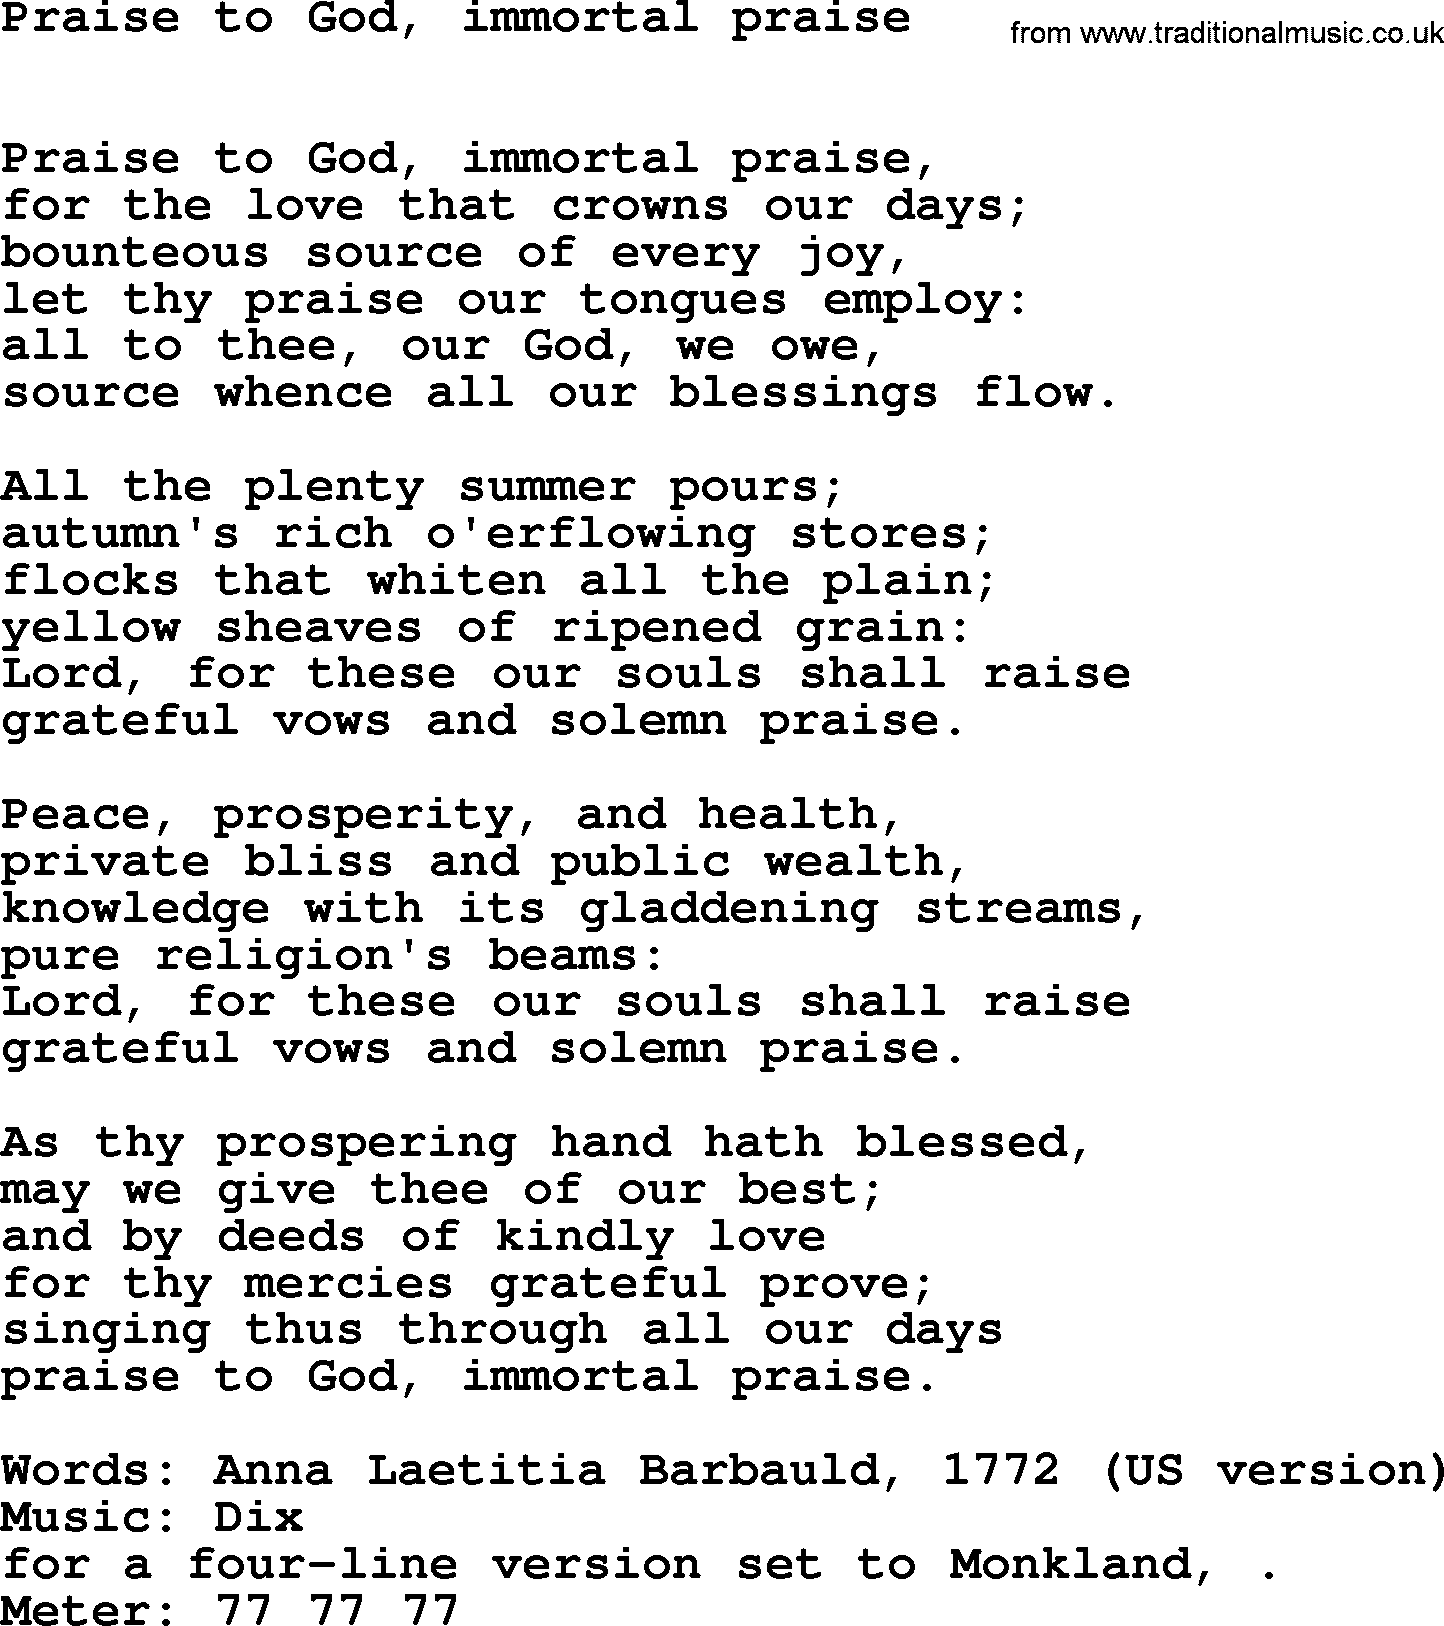 Book of Common Praise Hymn: Praise To God, Immortal Praise.txt lyrics with midi music